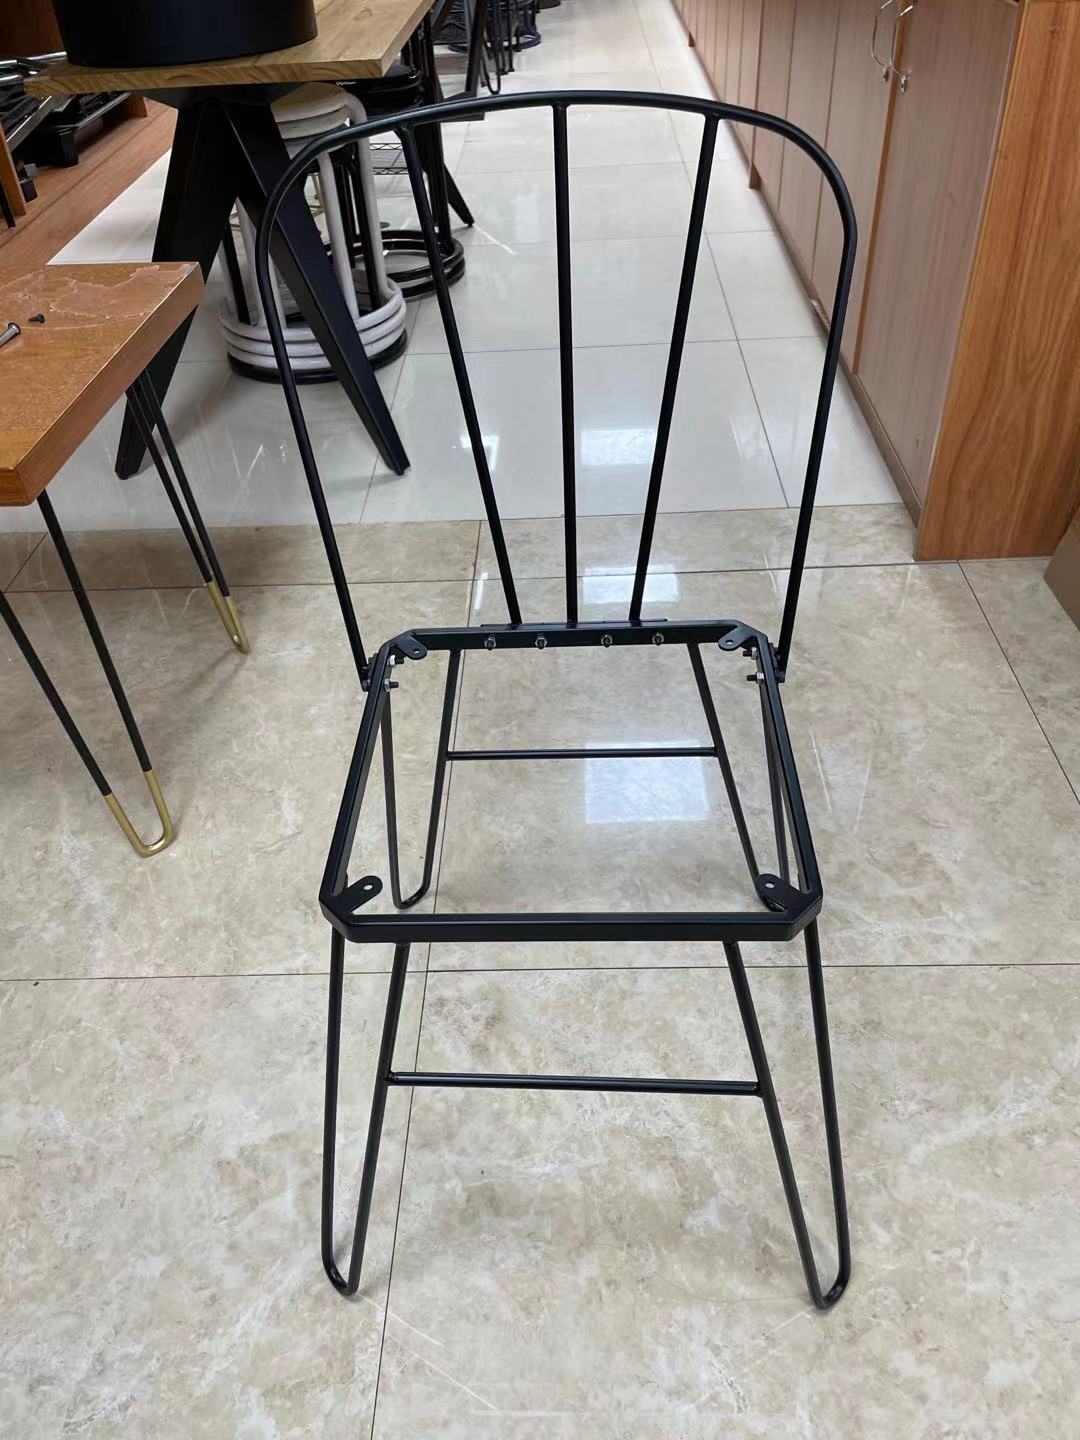 Our new chair design - RizAndMicaMake